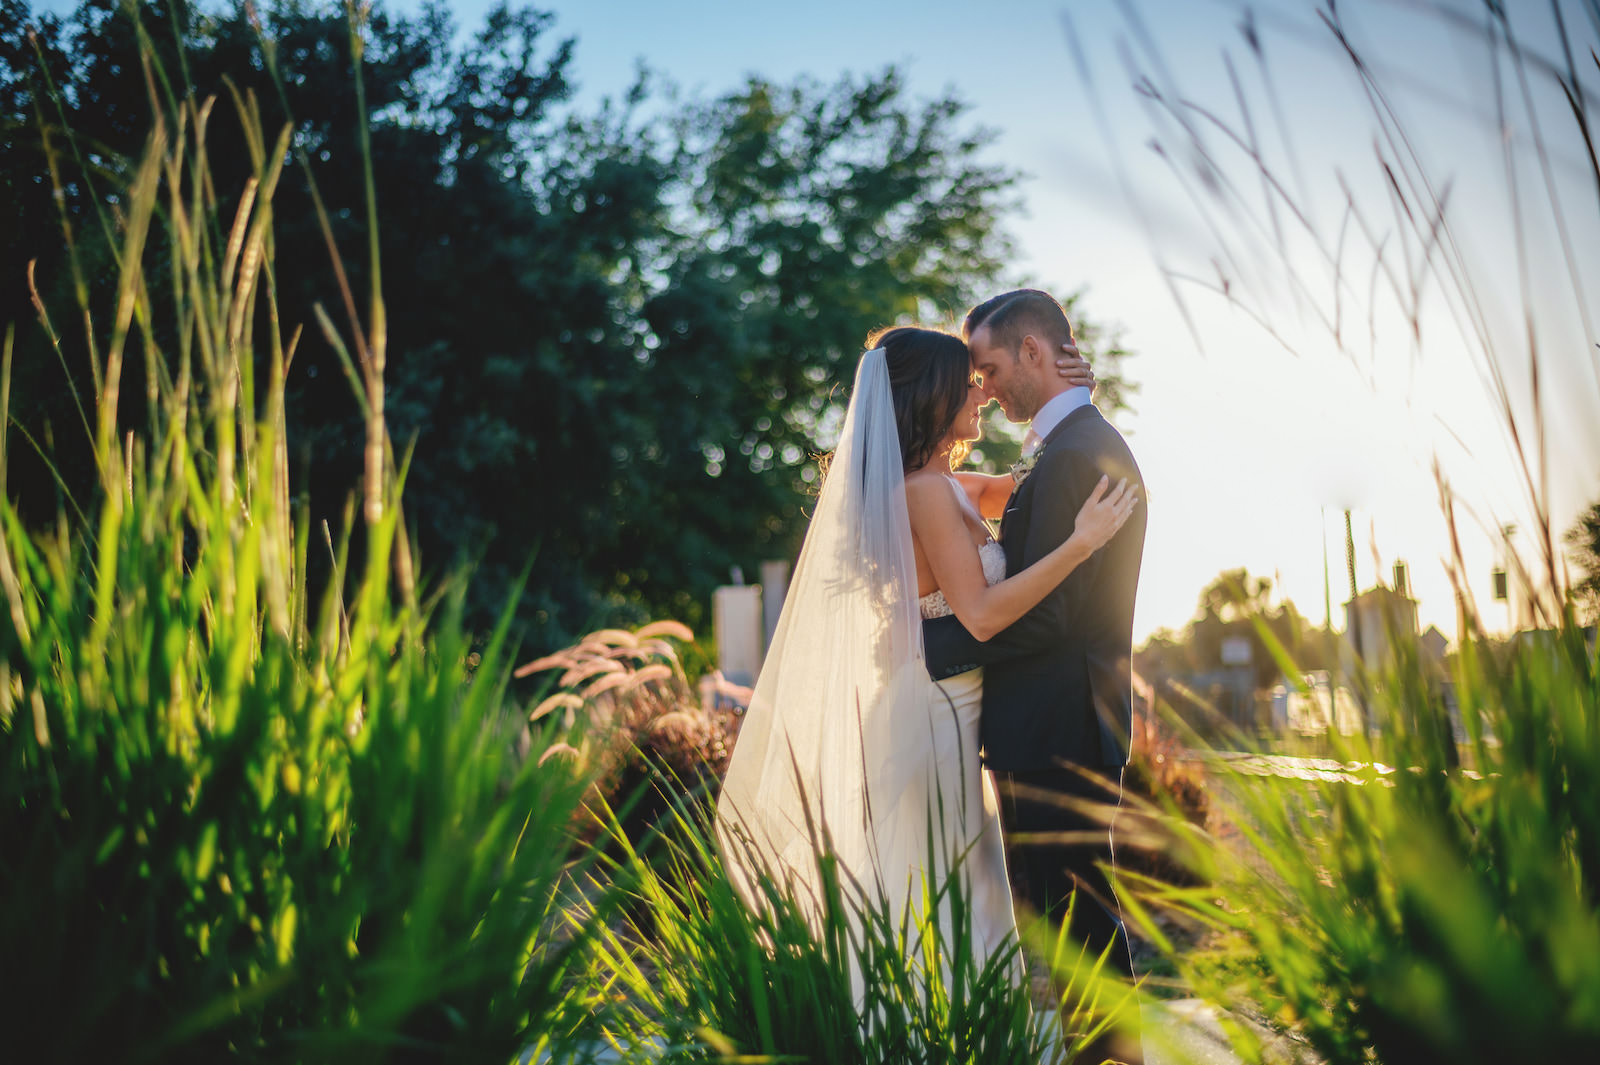 Romantic Sunset Wedding Photo of Bride and Groom in Garden